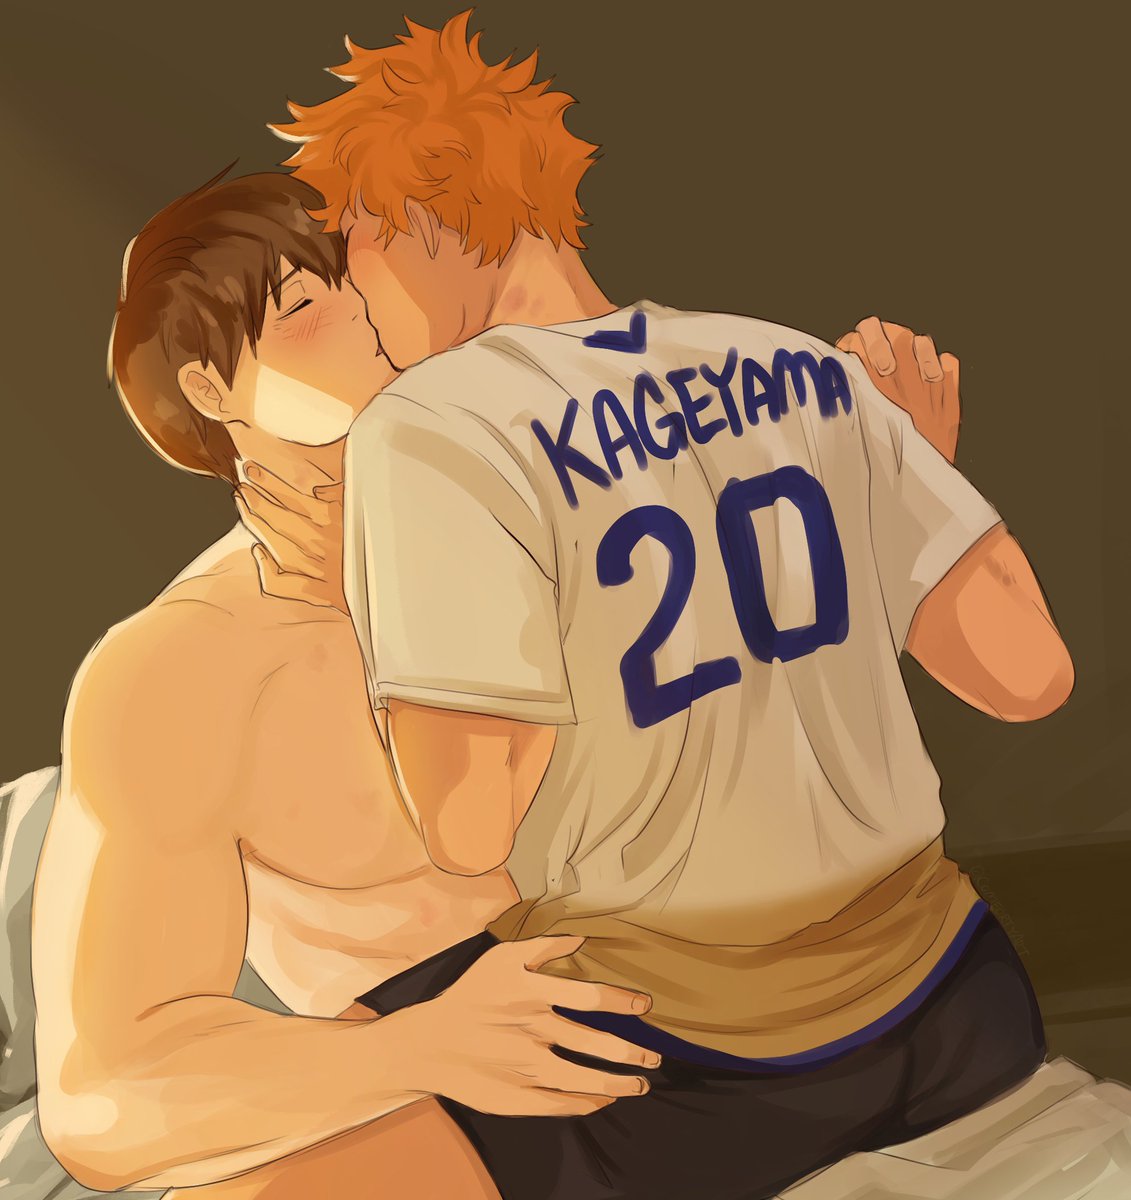 Boys Kissing 🌅 

#kagehina #影日